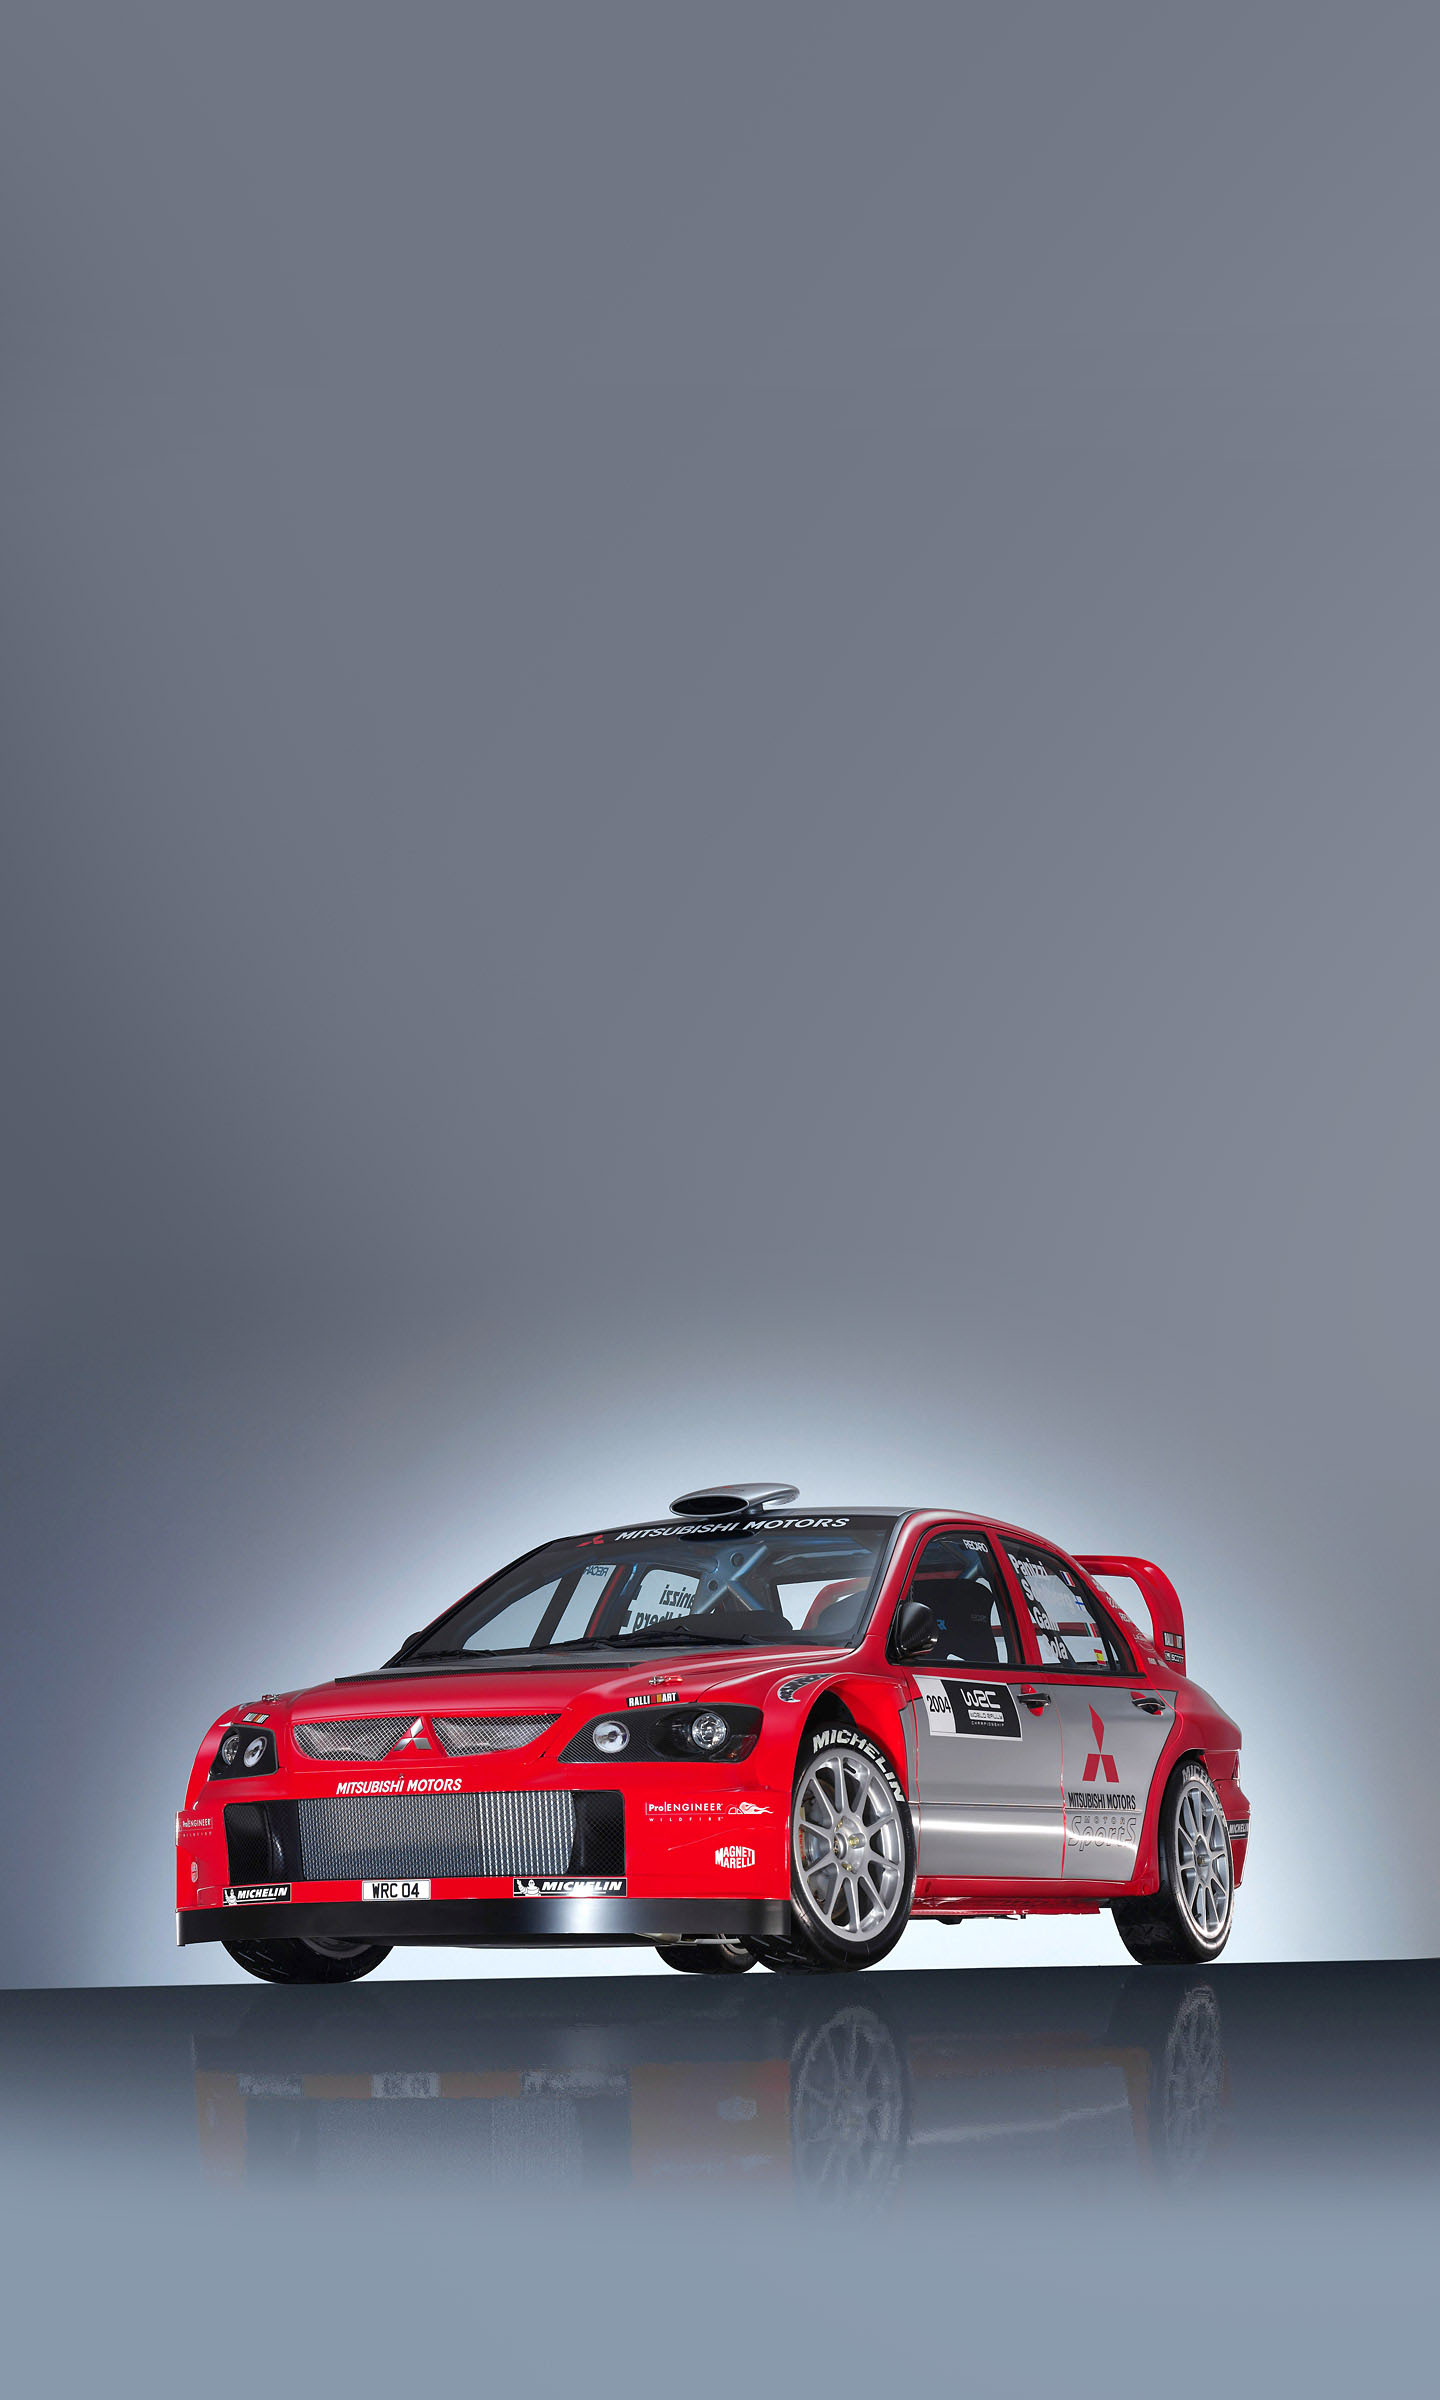  2004 Mitsubishi Lancer WRC04 Wallpaper.